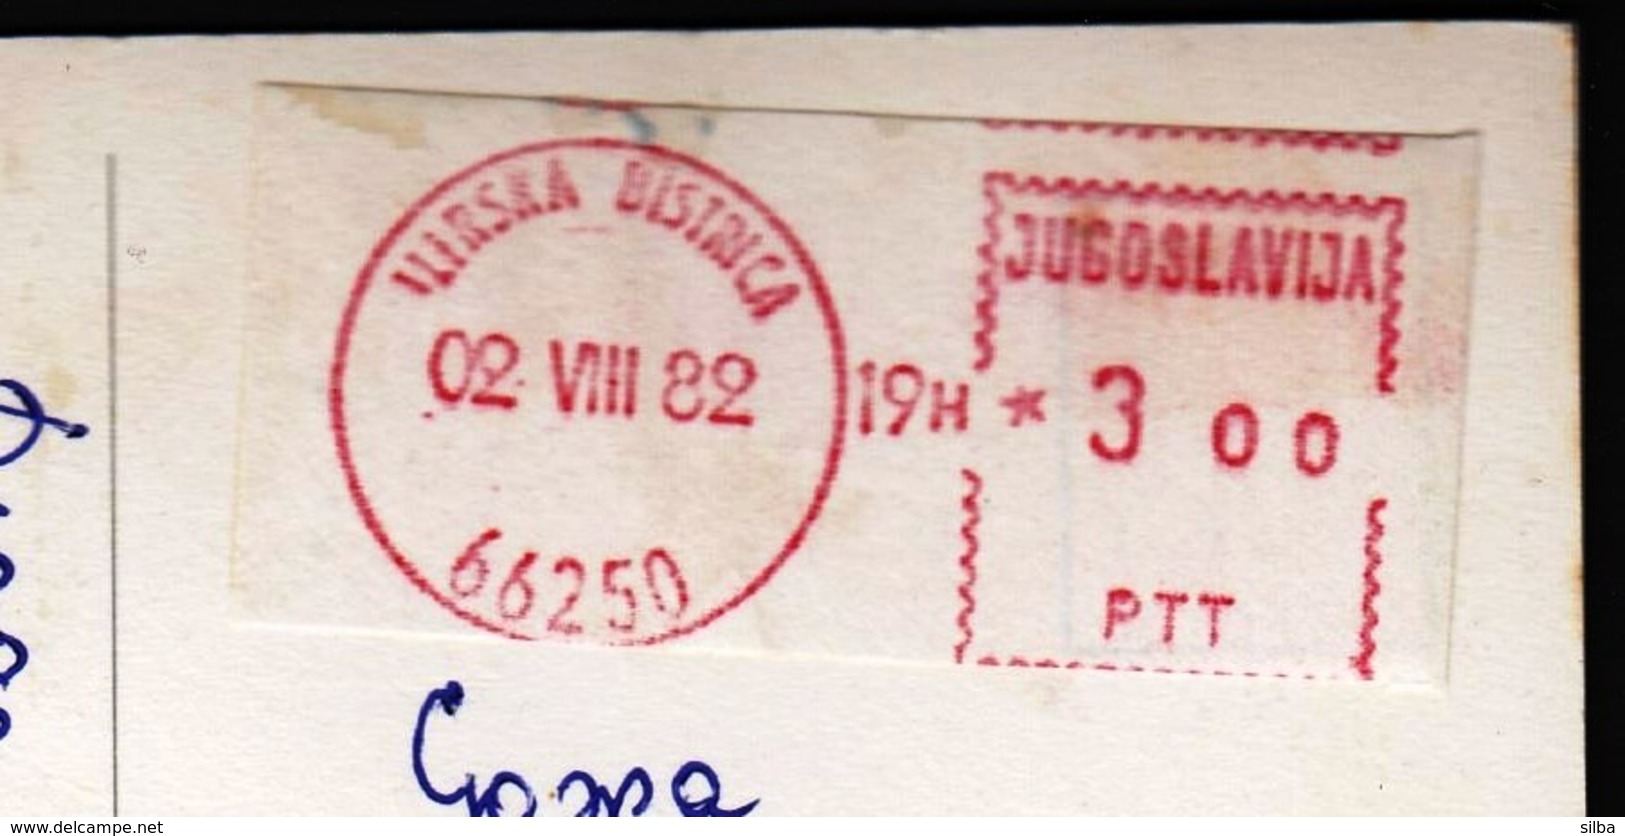 Slovenia Ilirska Bistrica 1982 / Machine Stamp On Post Label / Postcard Klana Croatia - Slowenien